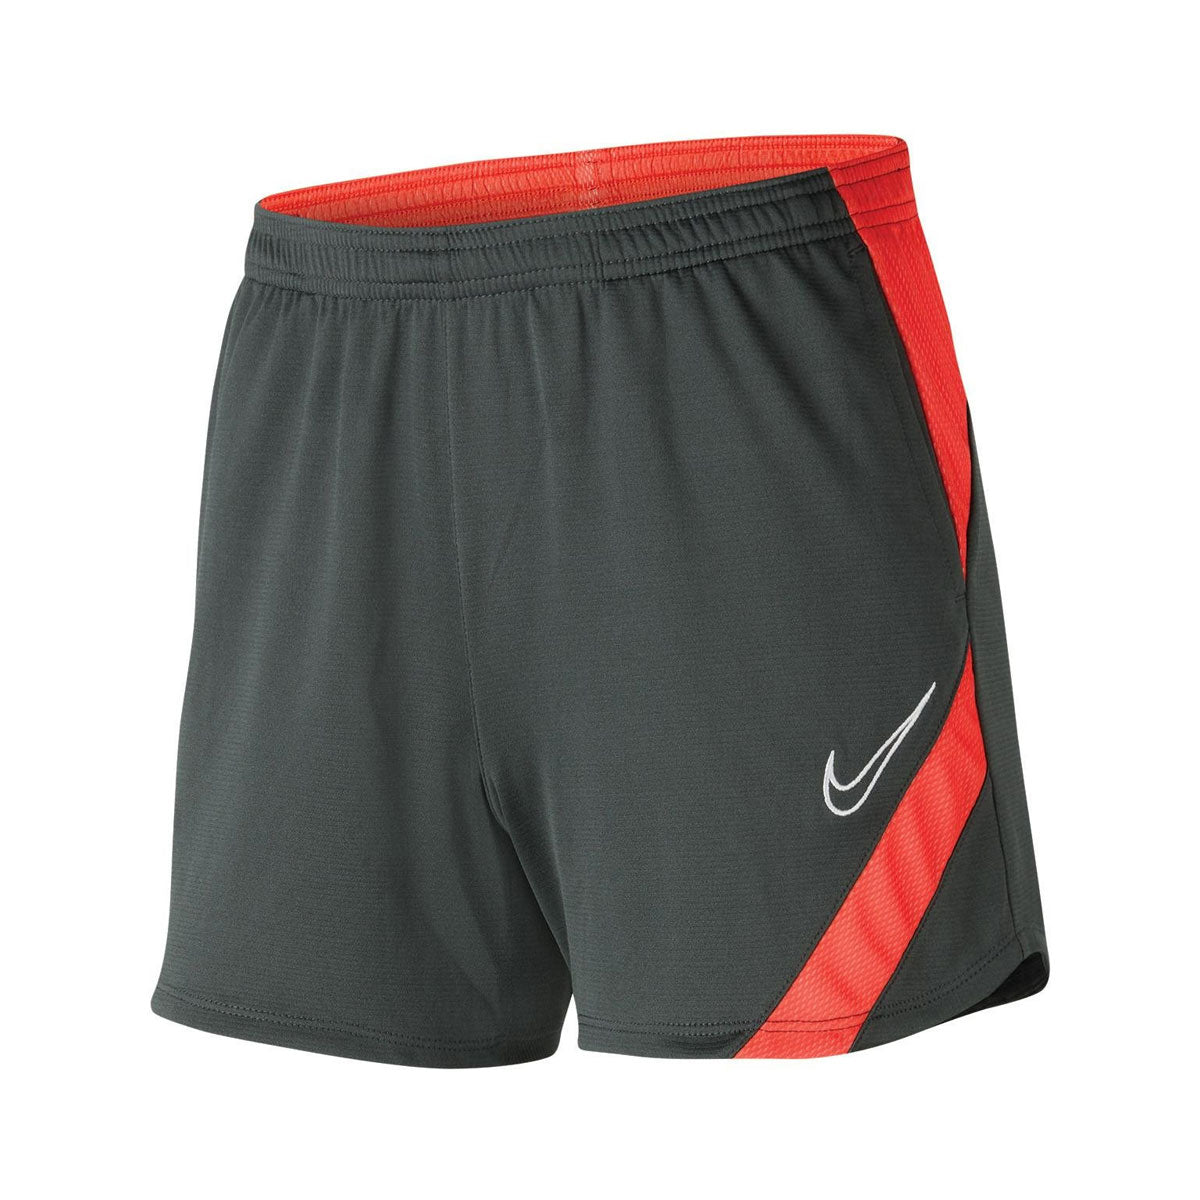 Nike Women's Dry Academy Pro shorts